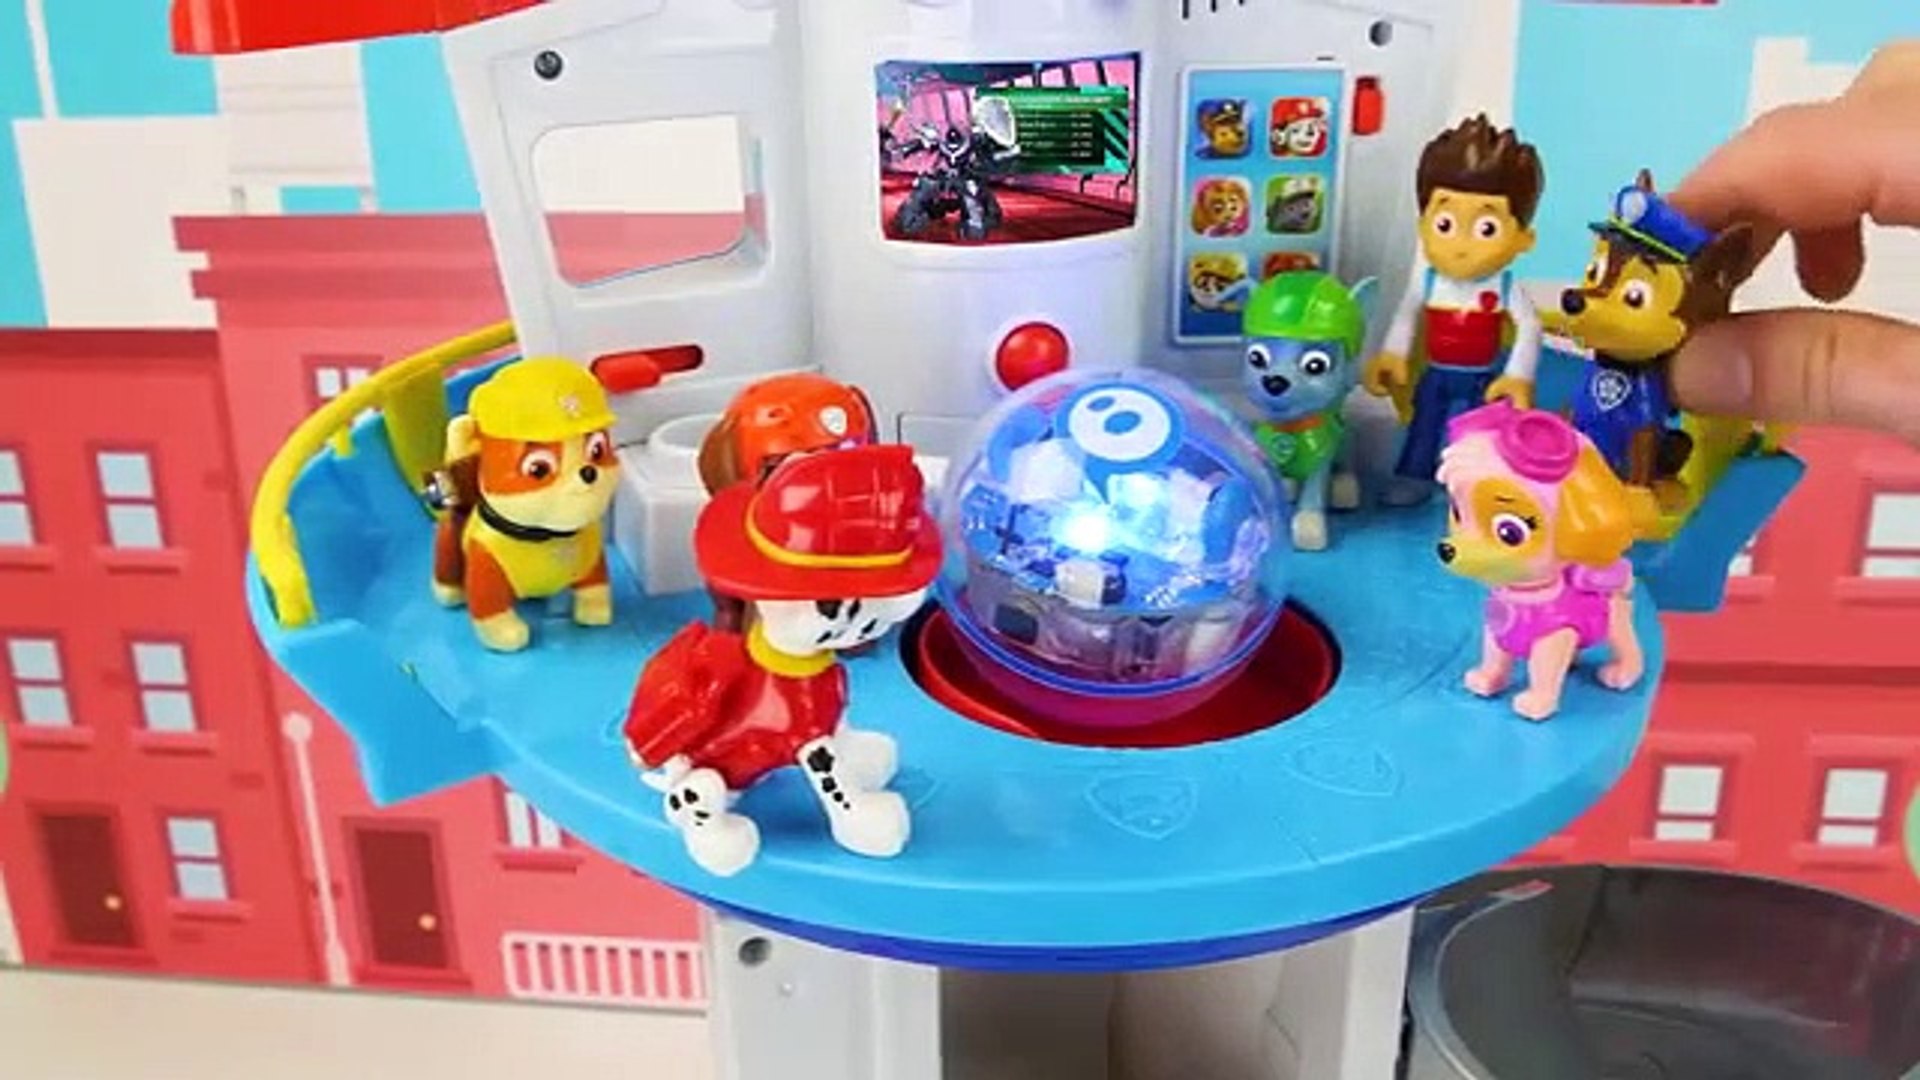 paw patrol toy videos for kids